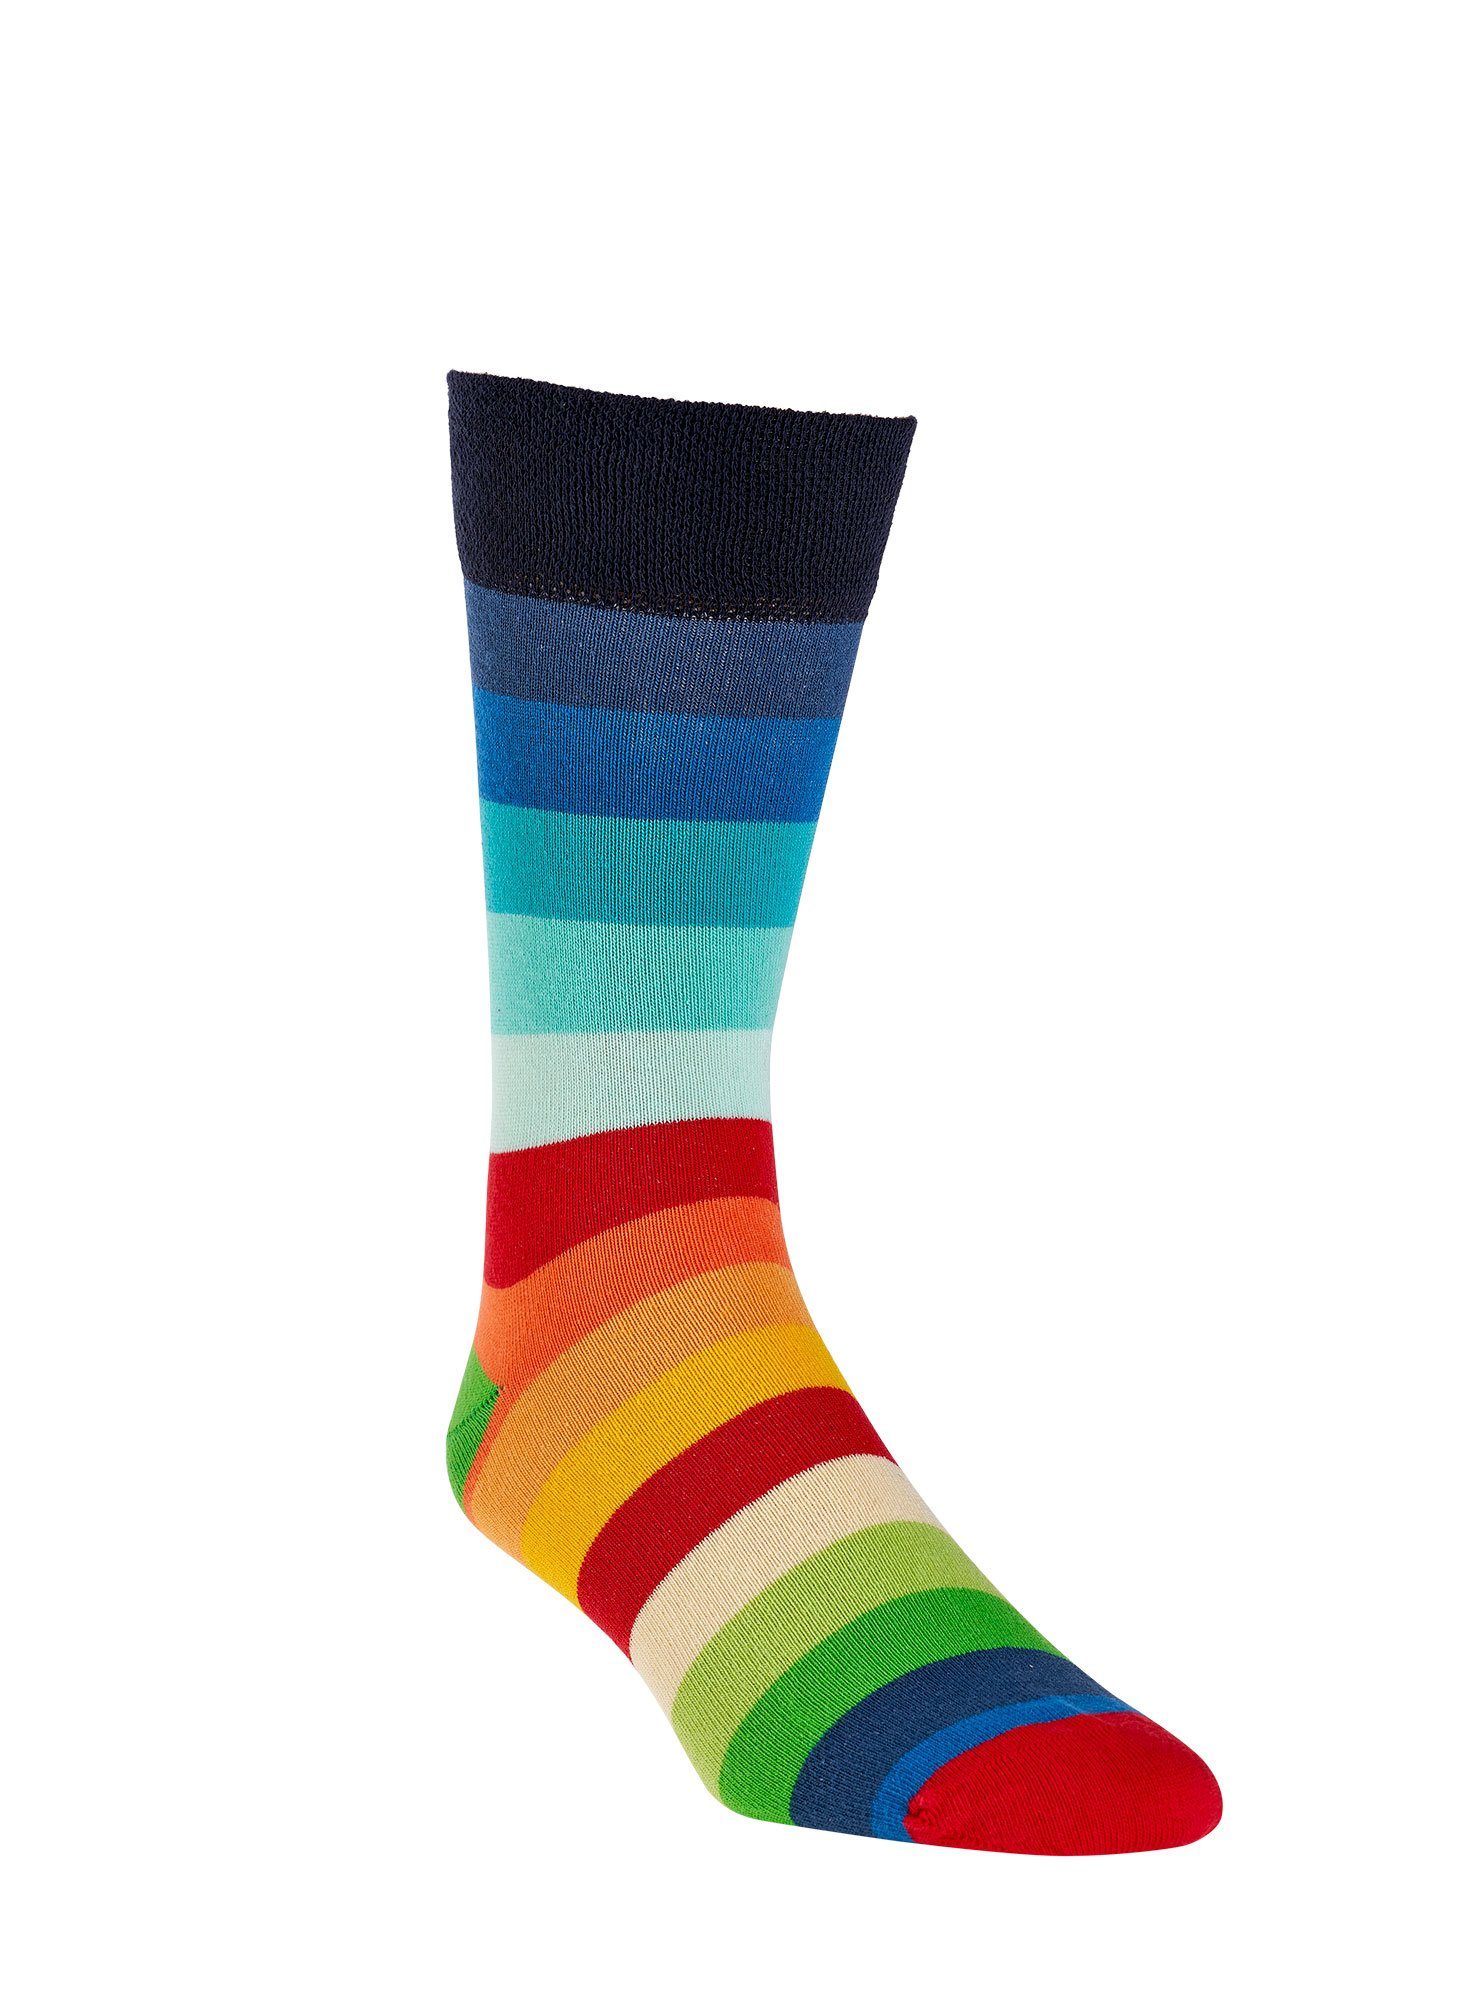 Baumwolle Rainbow Regenbogen 4 Toleranz Socken Socks Unisex Paar) Socken LGBTQ (2 Fun